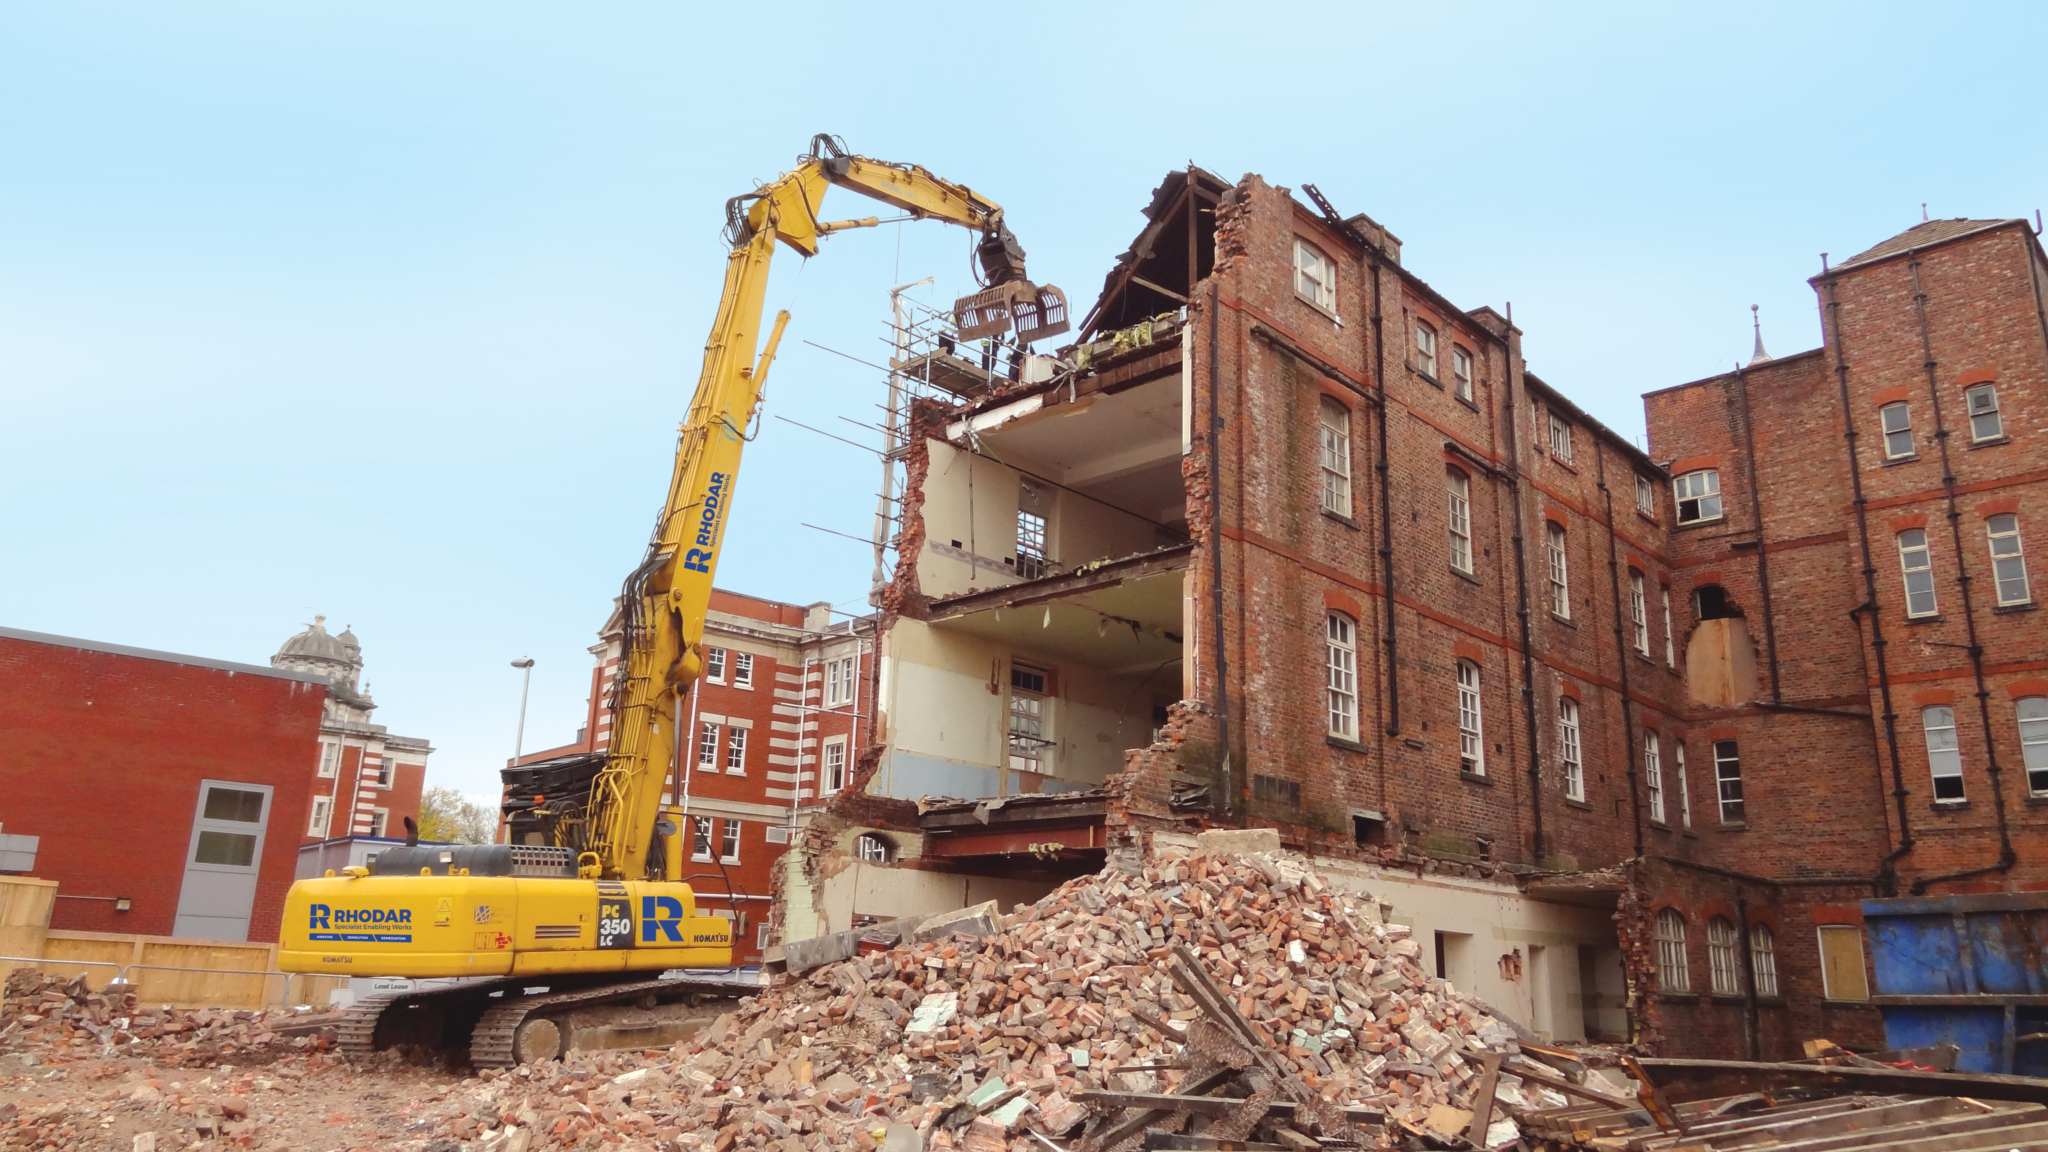 Rhodar-demolition-image.jpg#asset:1155